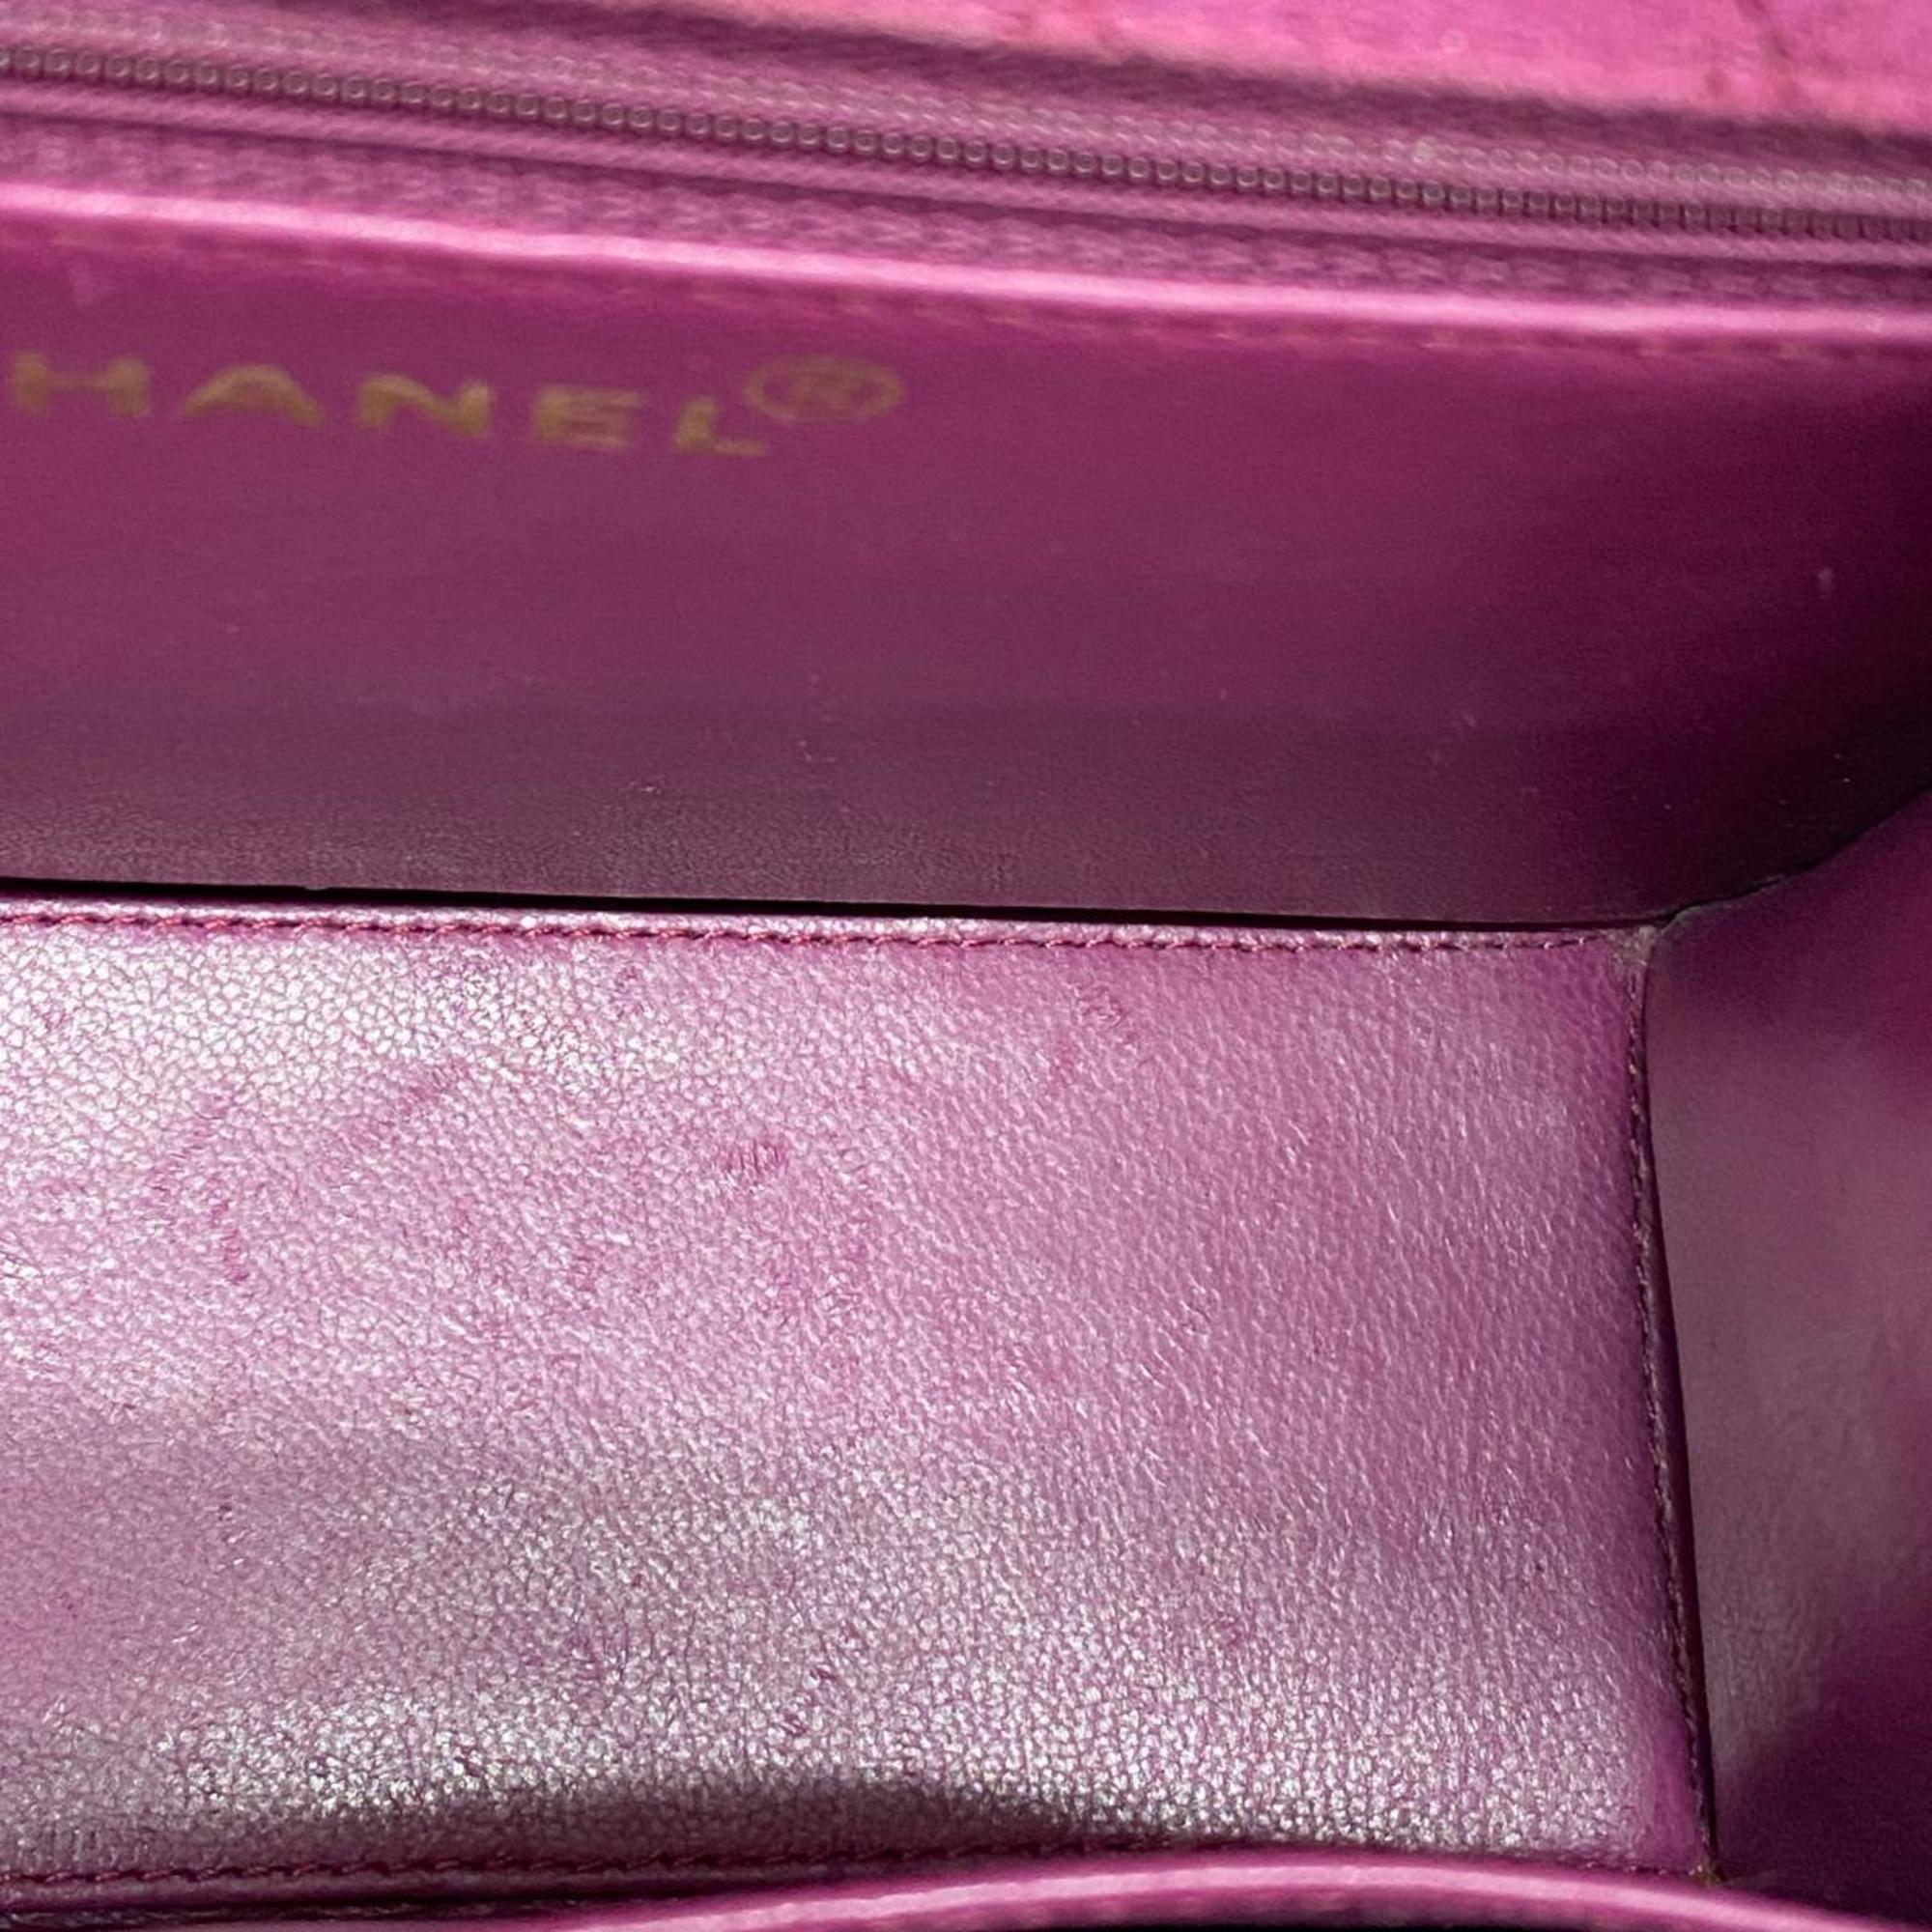 Chanel Shoulder Bag Chain Suede Pink Women's